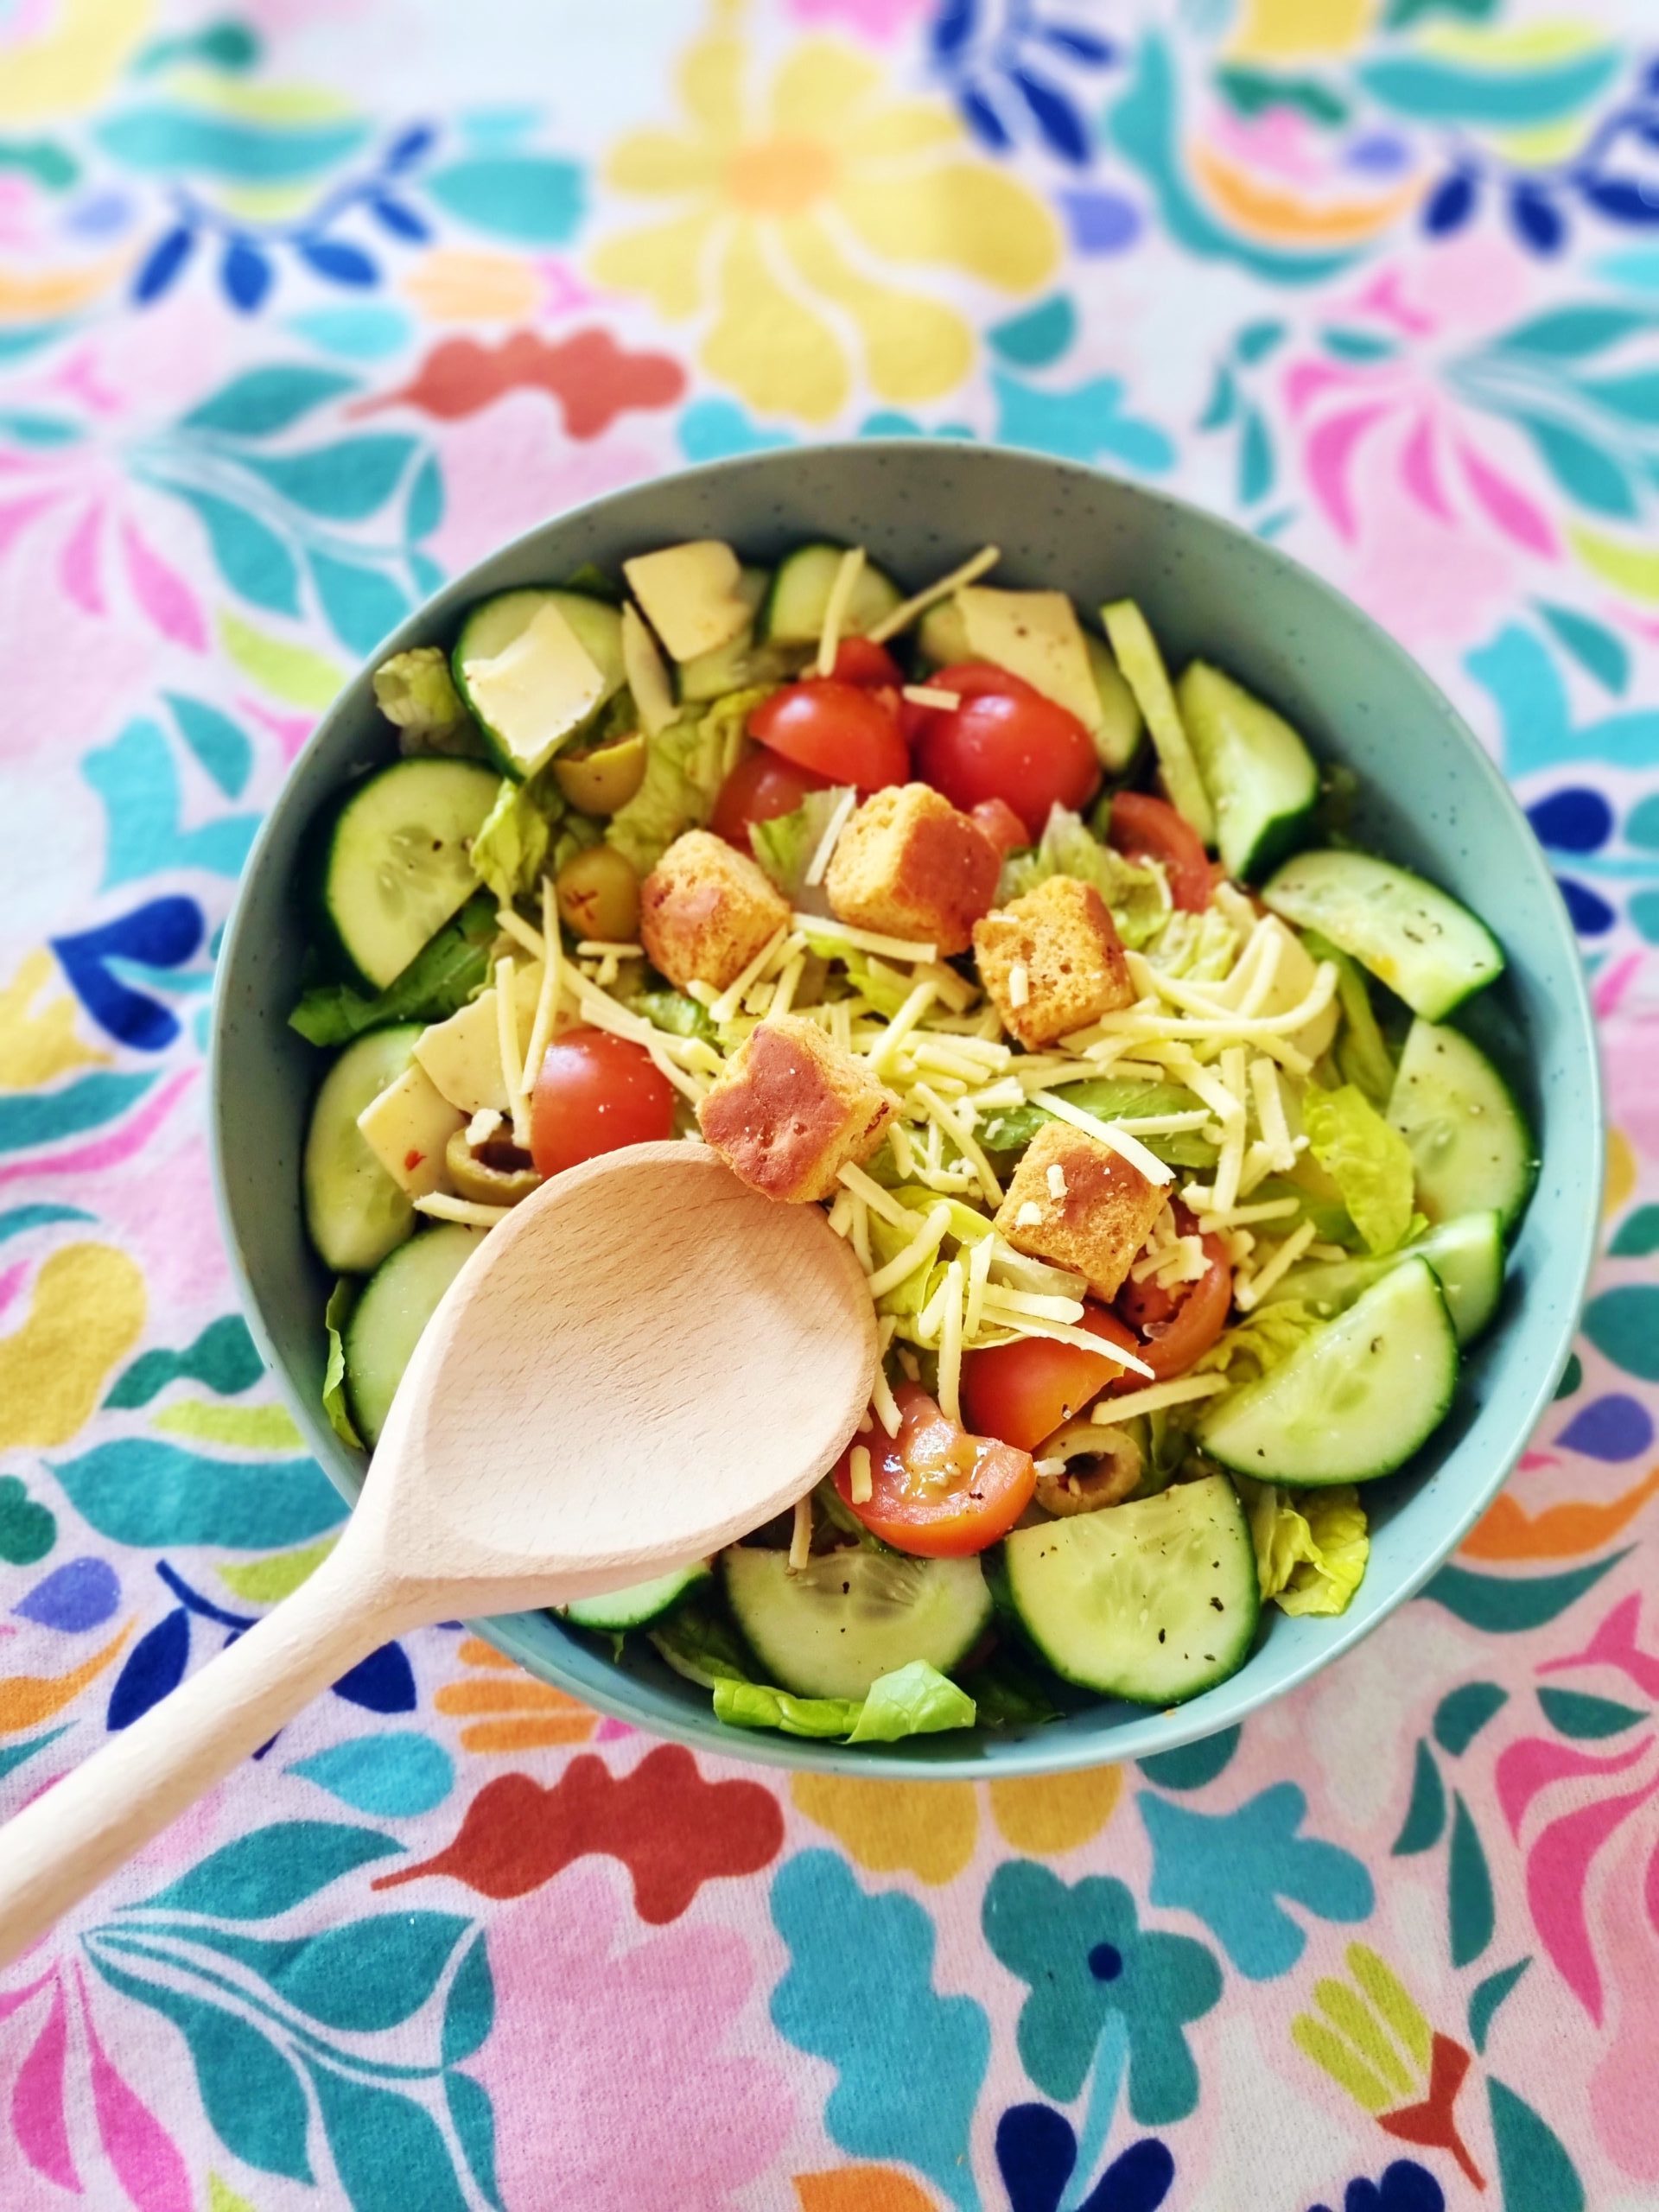 <img src="veggie.jpg" alt="veggie cheese salad in green bowl"/> 